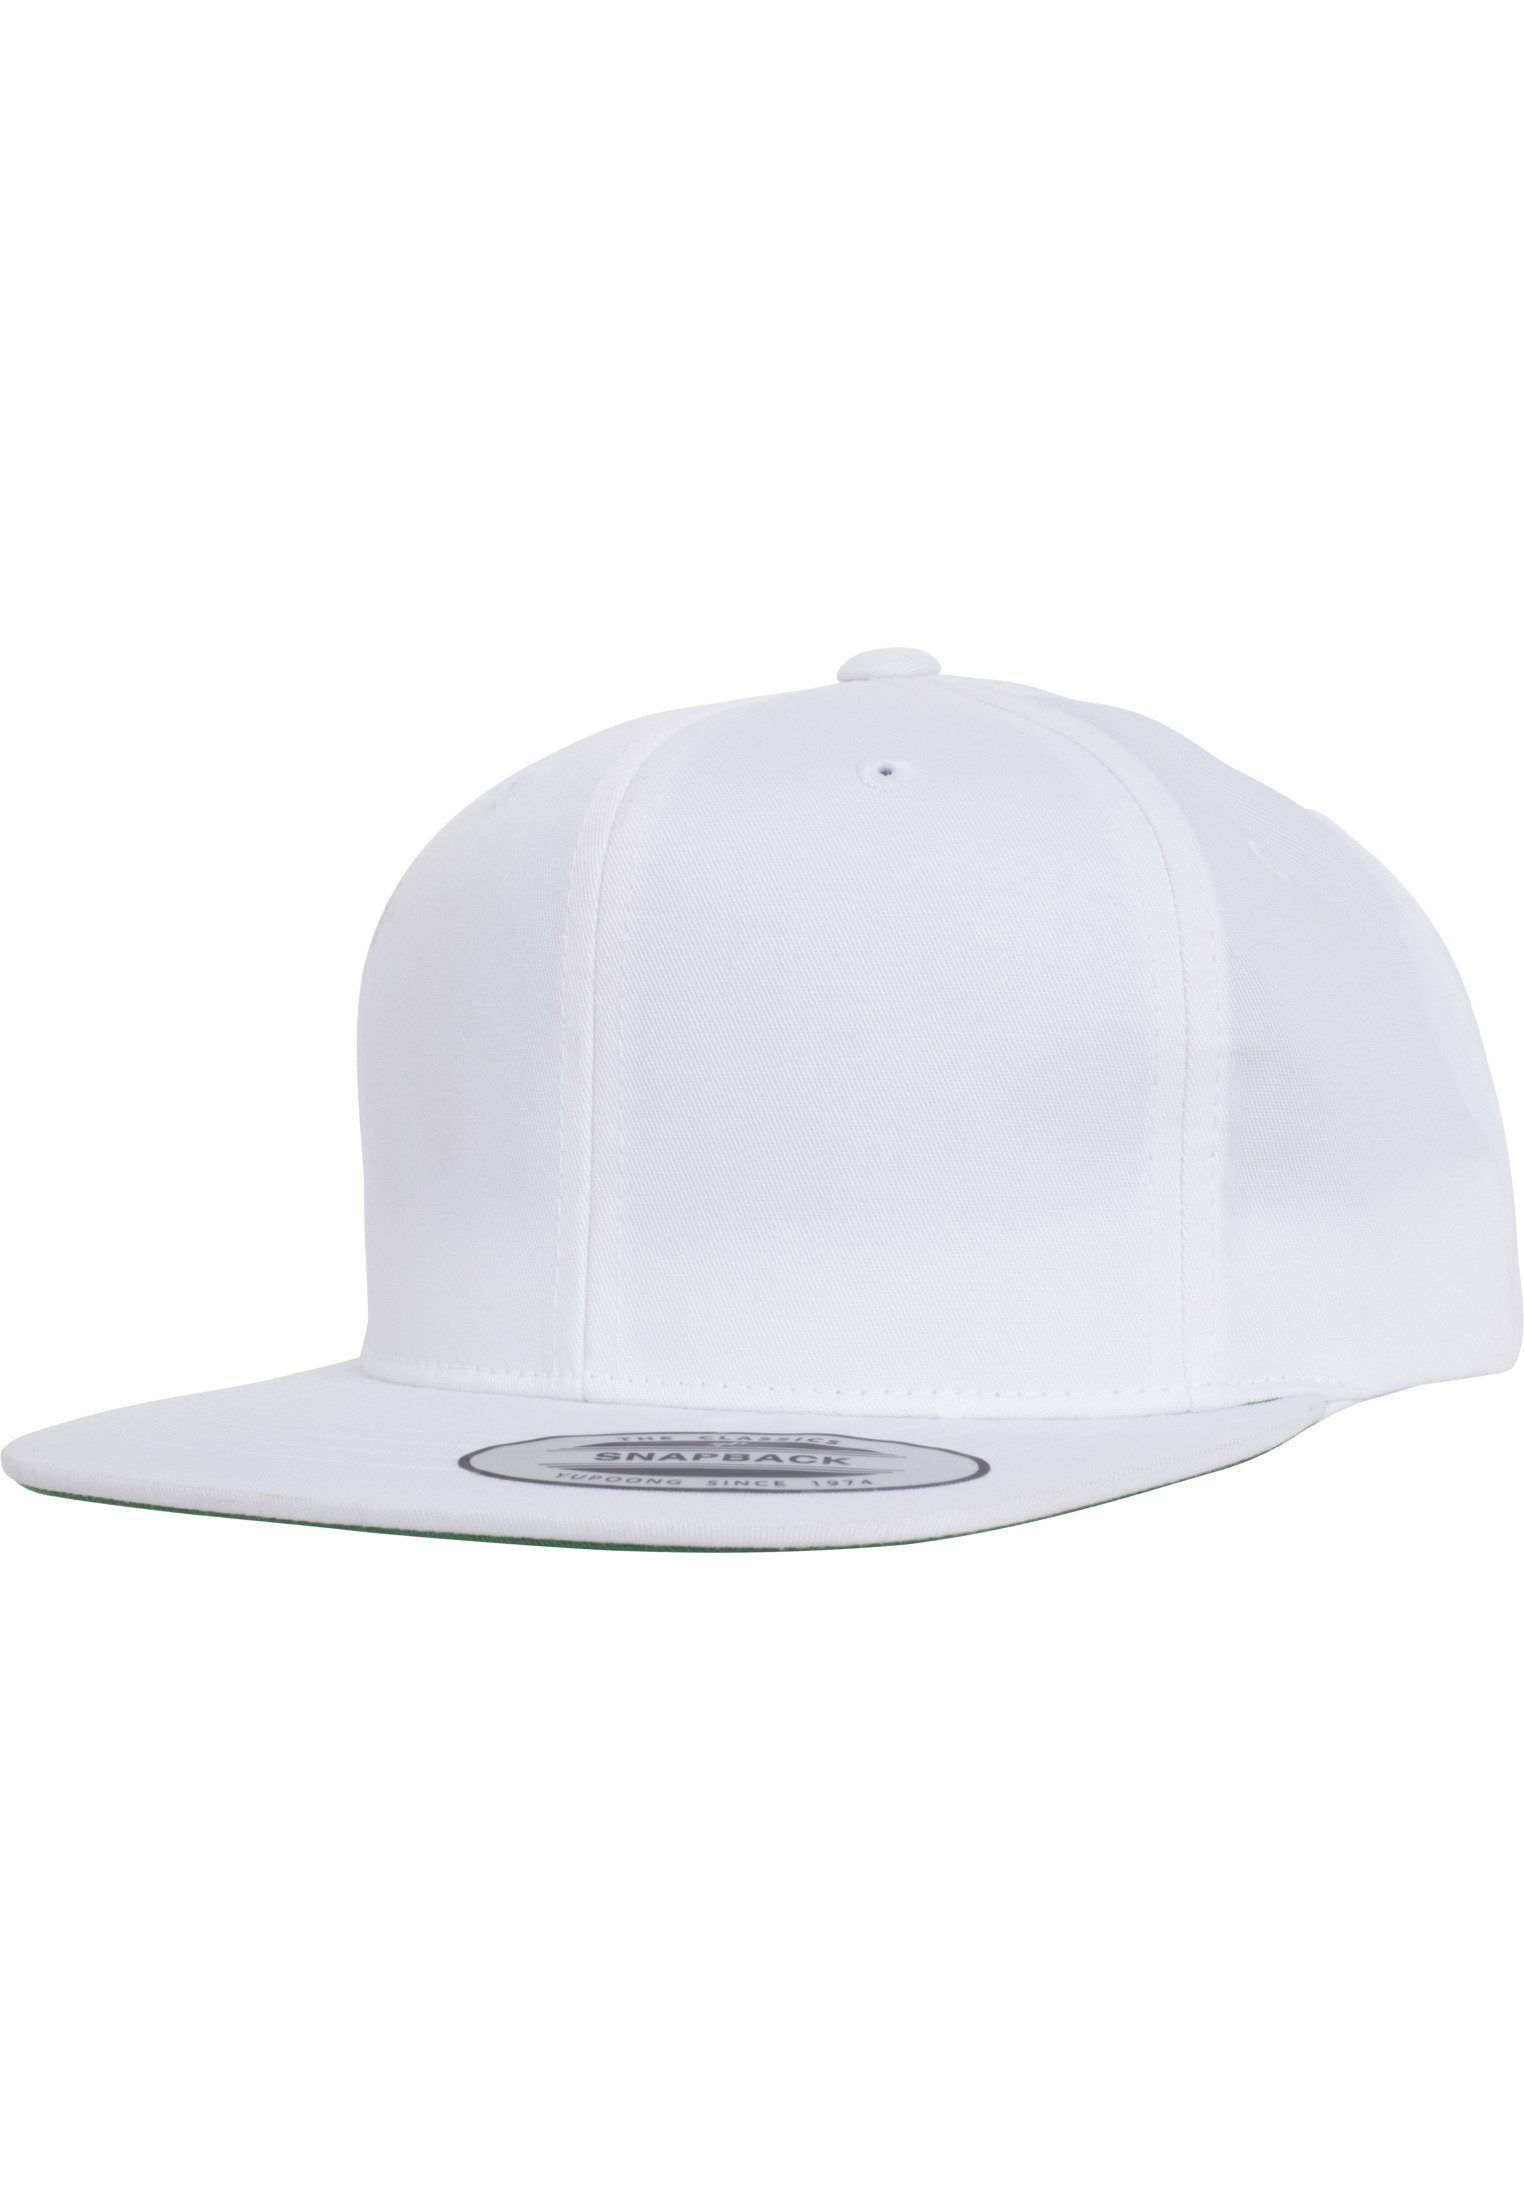 Flexfit Flex Cap Snapback Twill Youth Snapback Pro-Style Cap white